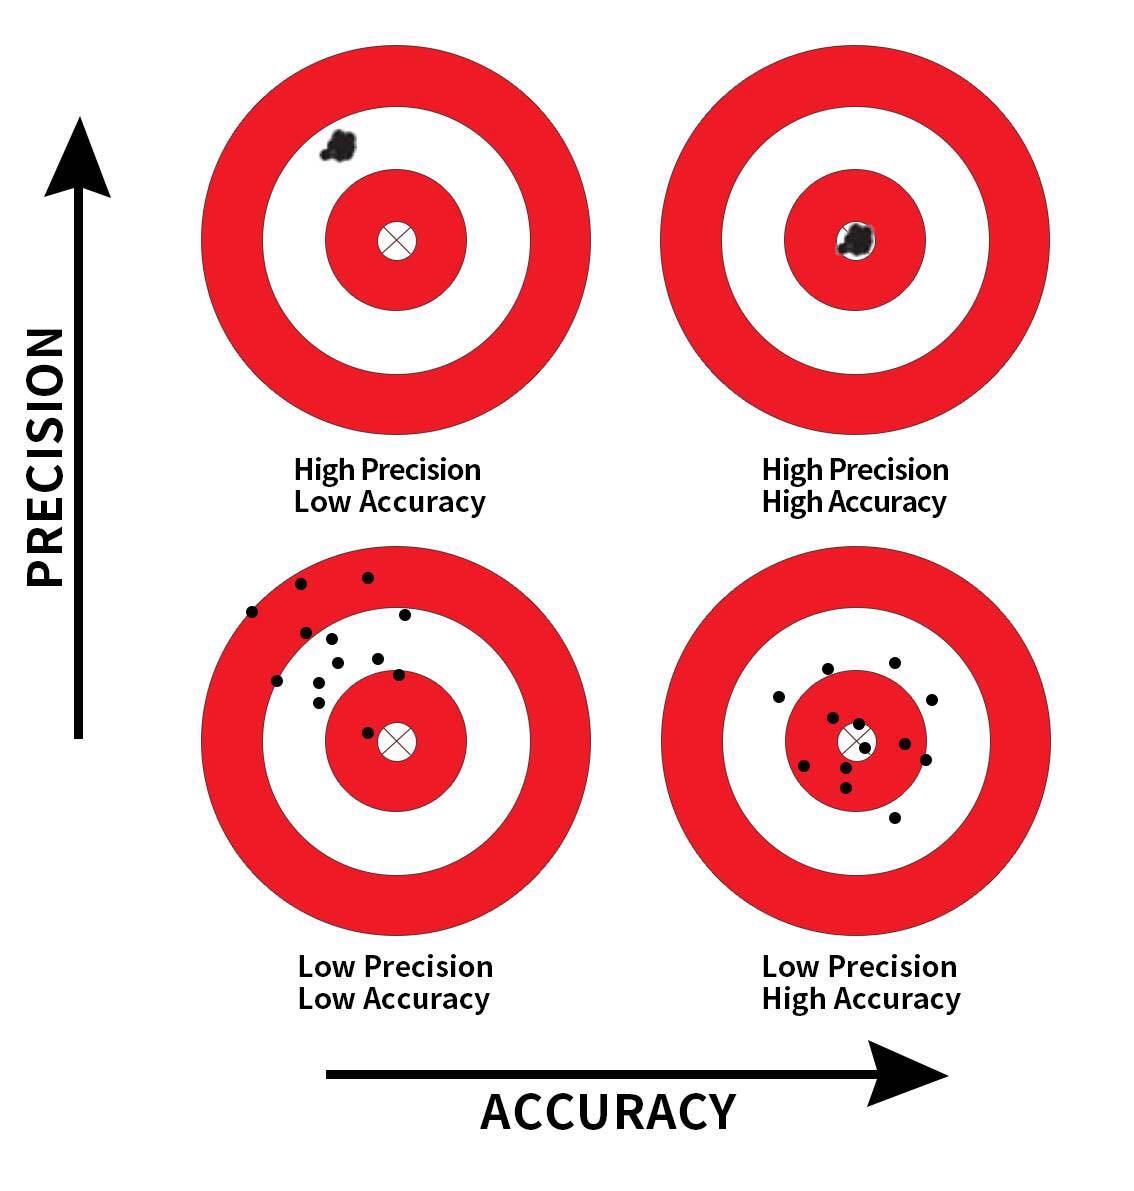 Comparing accuracy and precision.